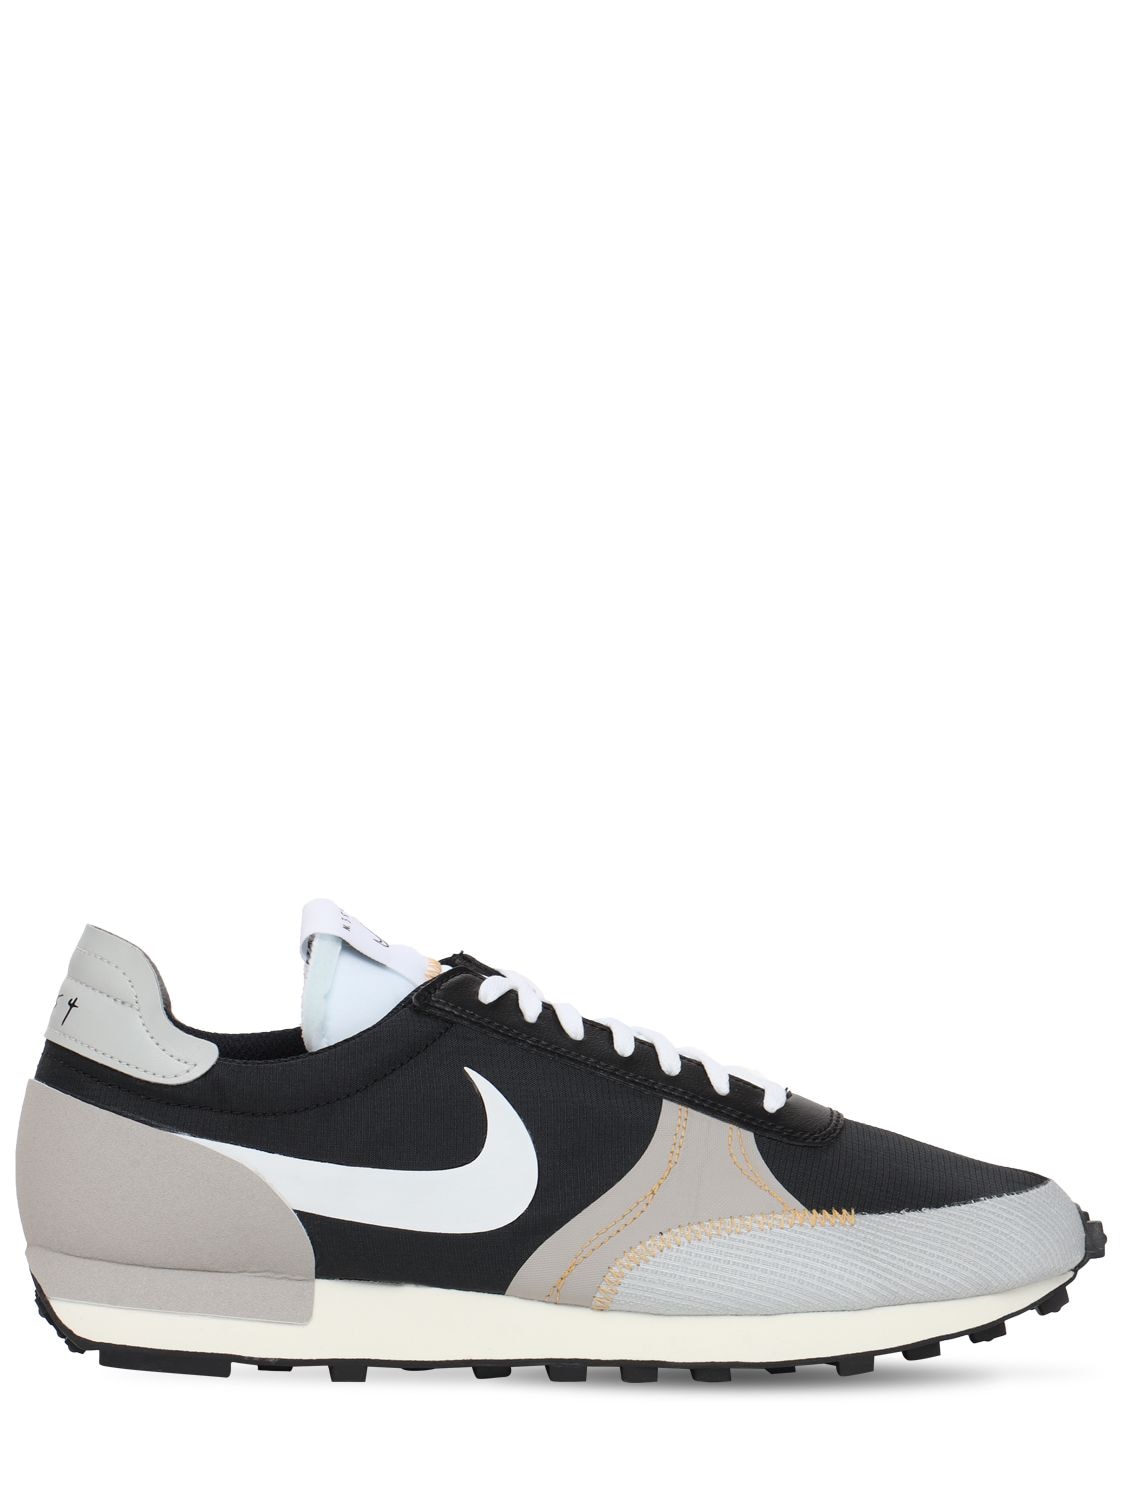 Nike Dbreak Type Se Sneakers Cu1756-001 In Black / White-grey Fog ...